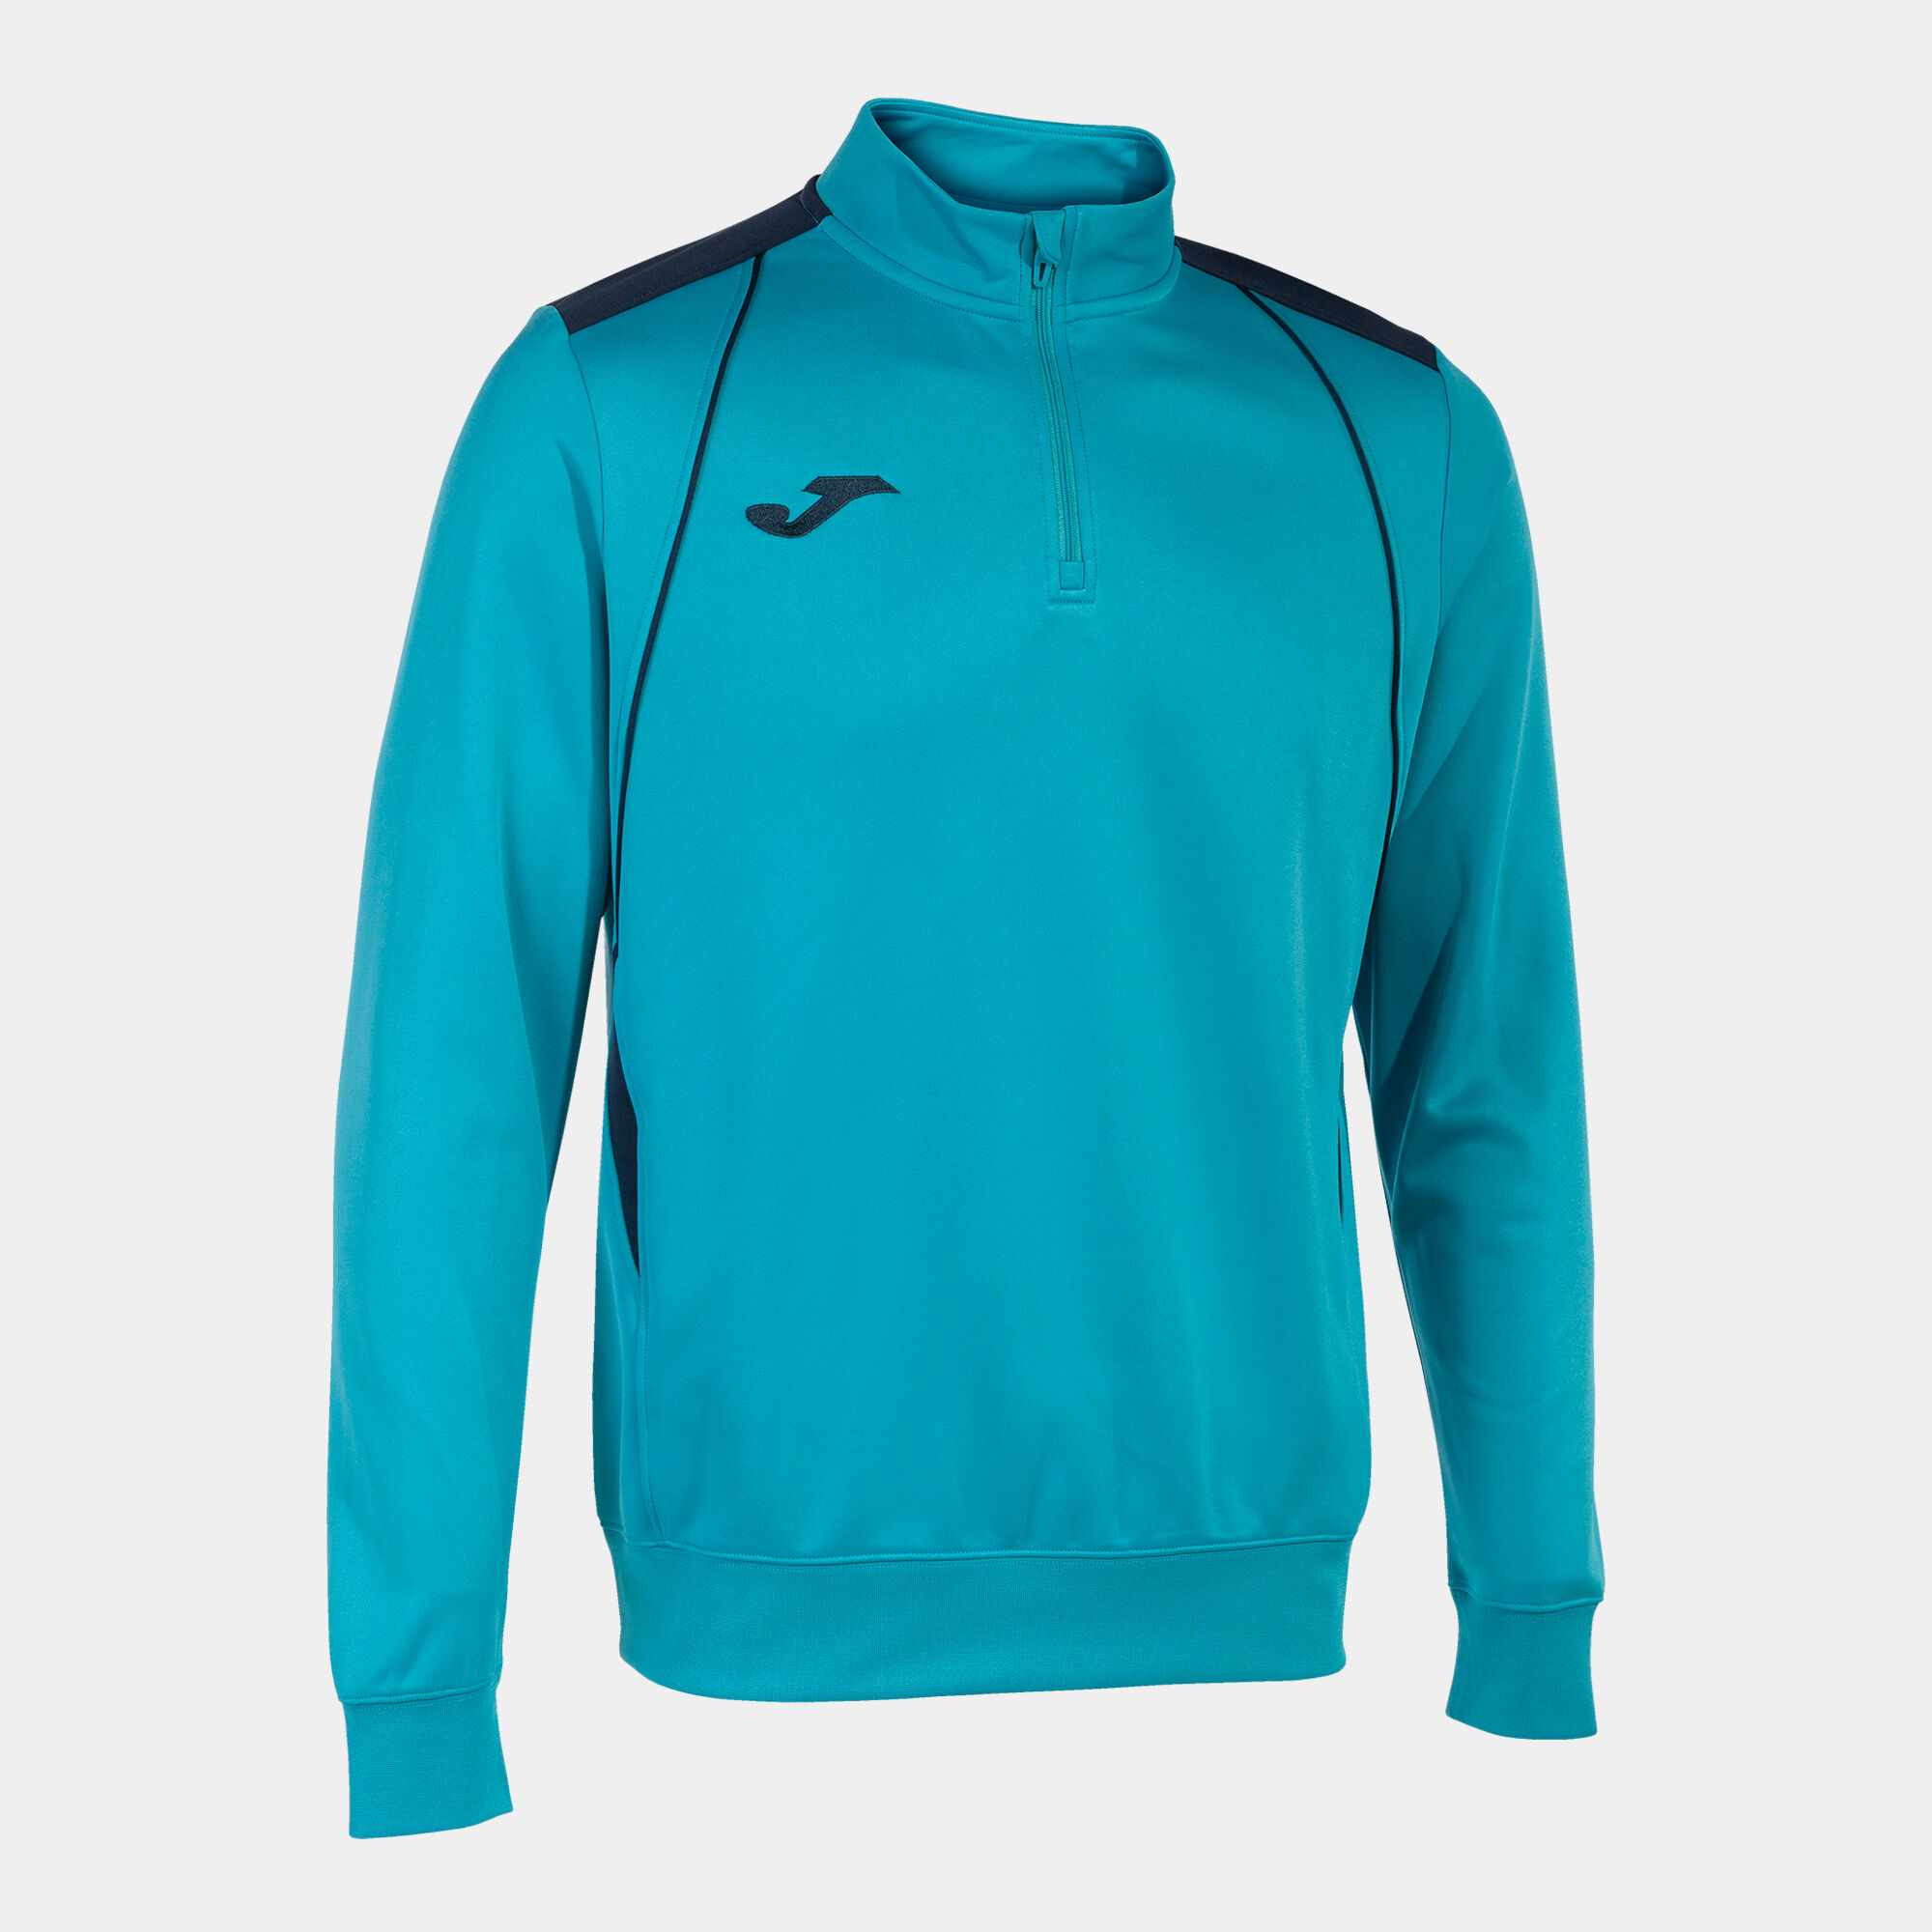 Sweat-shirt homme Championship VII turquoise fluo bleu marine